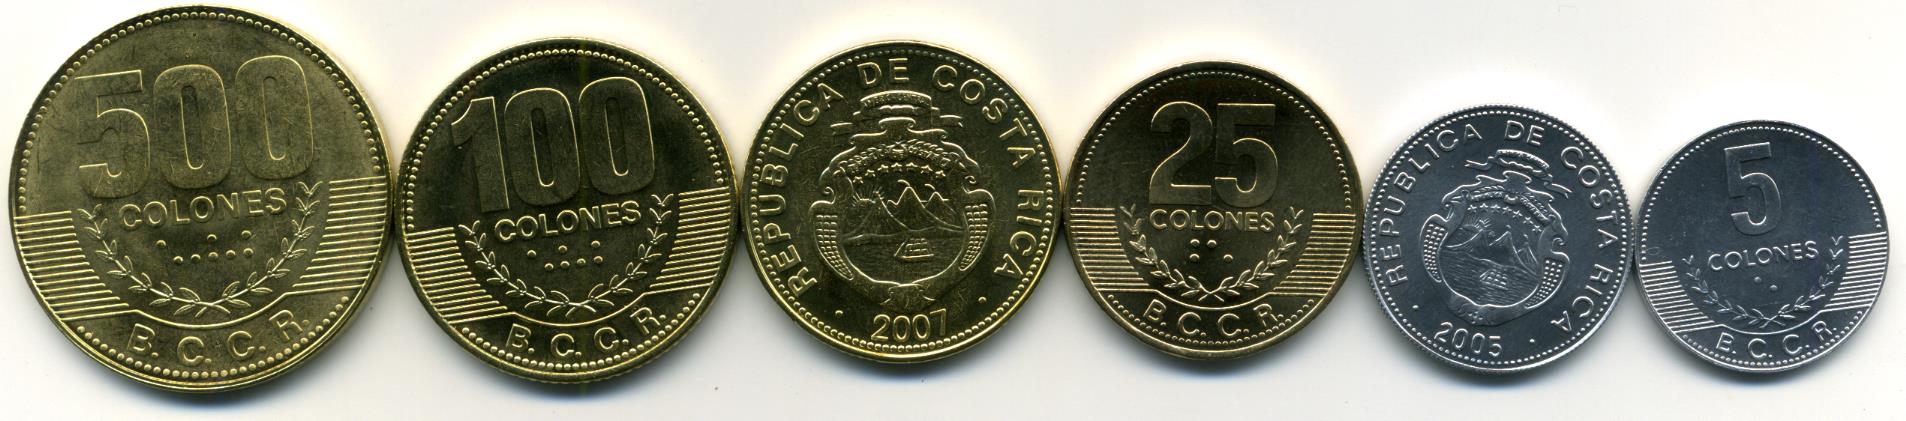 Costa Rica coin